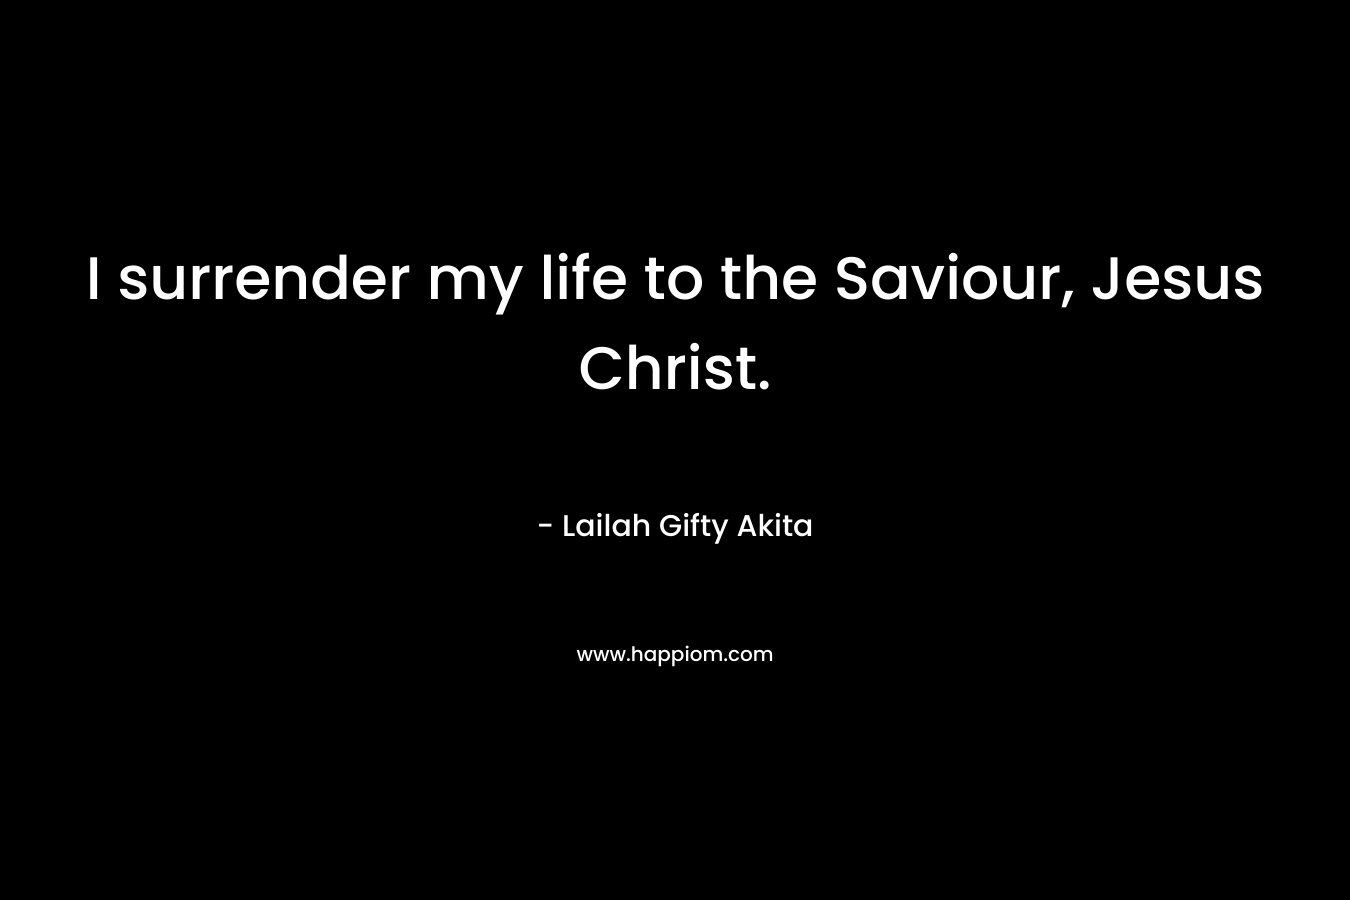 I surrender my life to the Saviour, Jesus Christ.